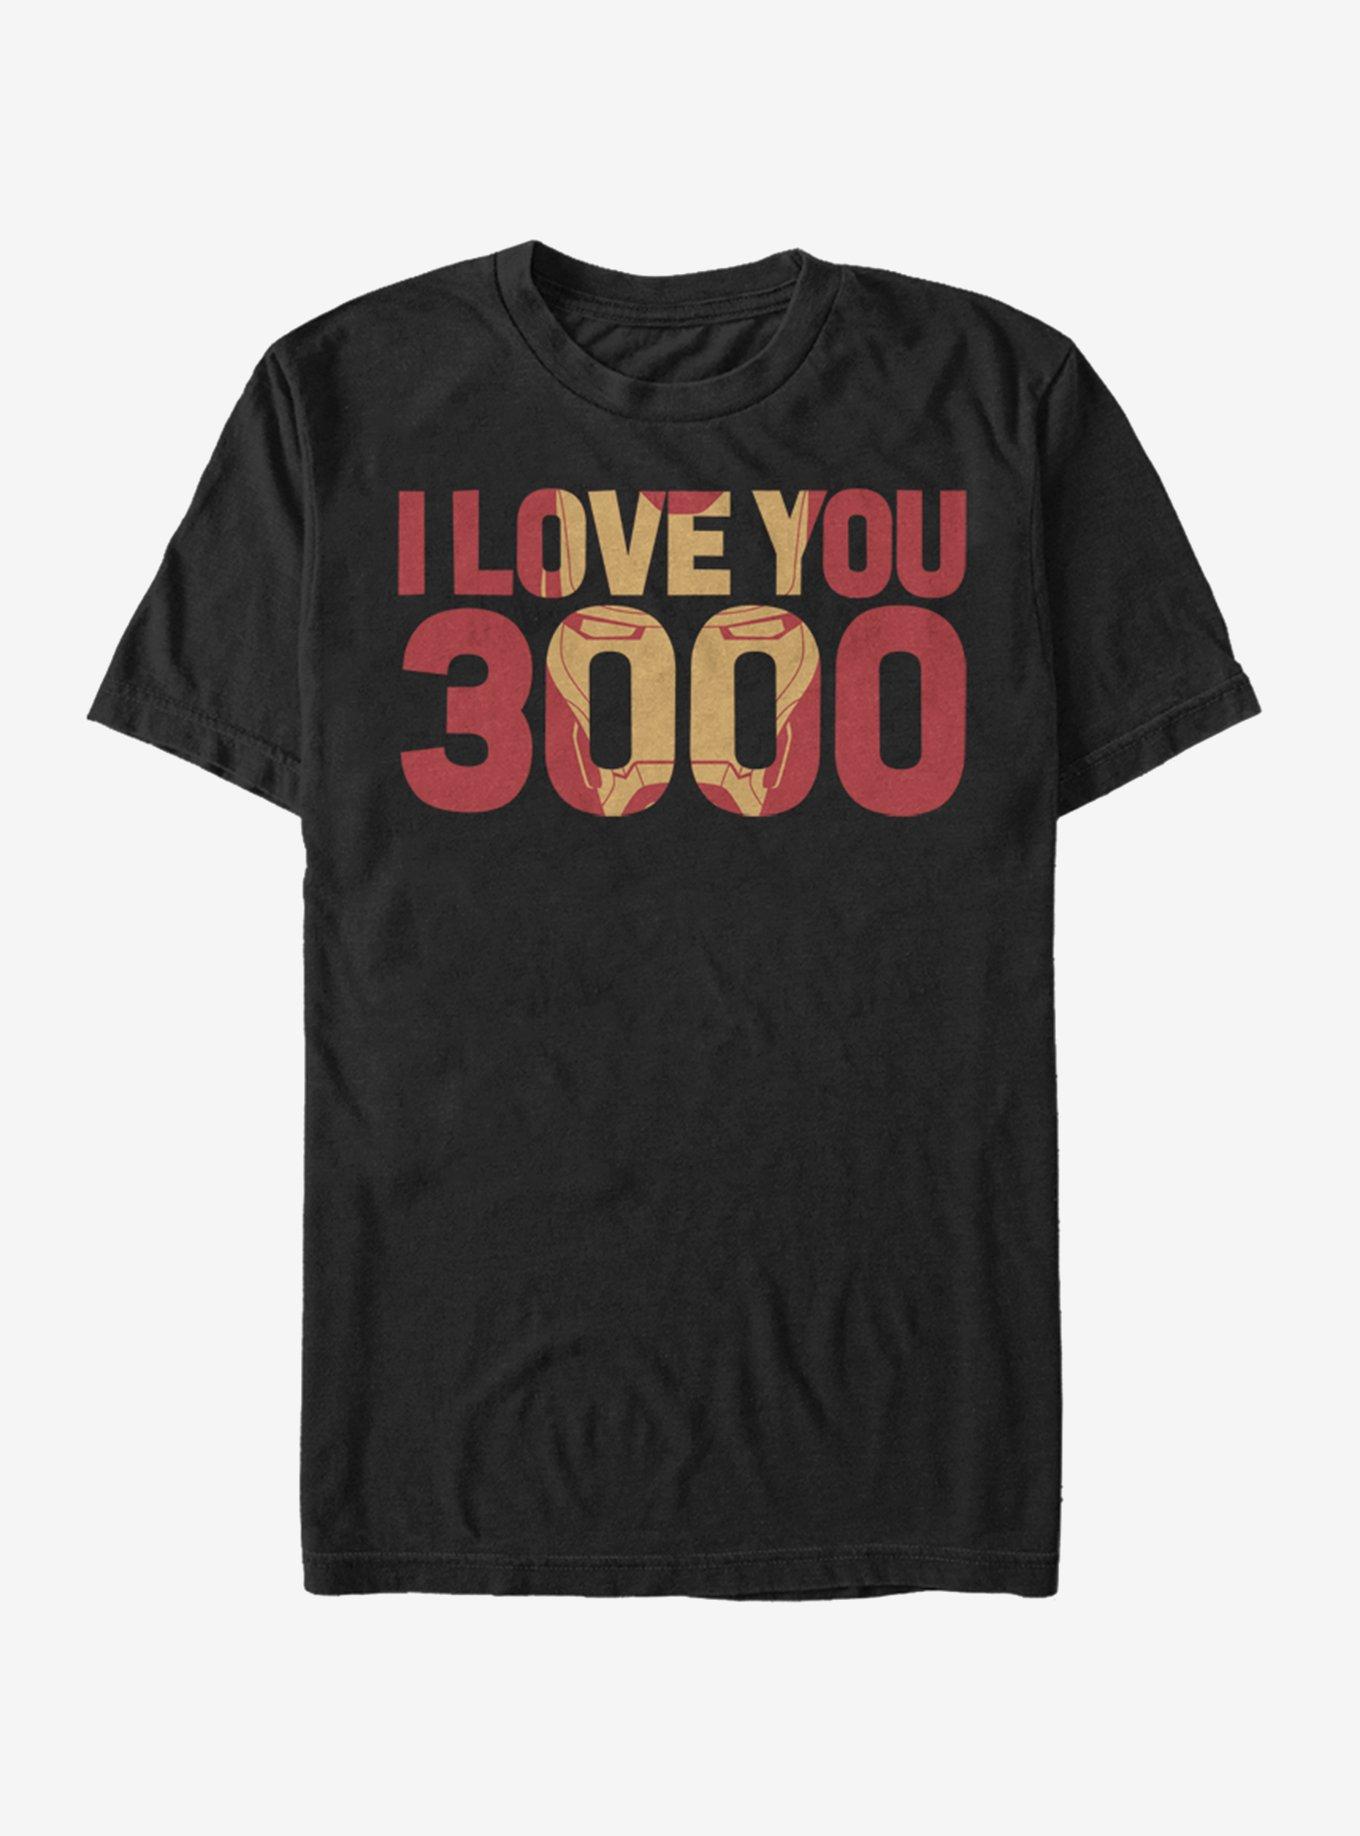 Marvel Avengers: Endgame Love You 3000 T-Shirt, BLACK, hi-res